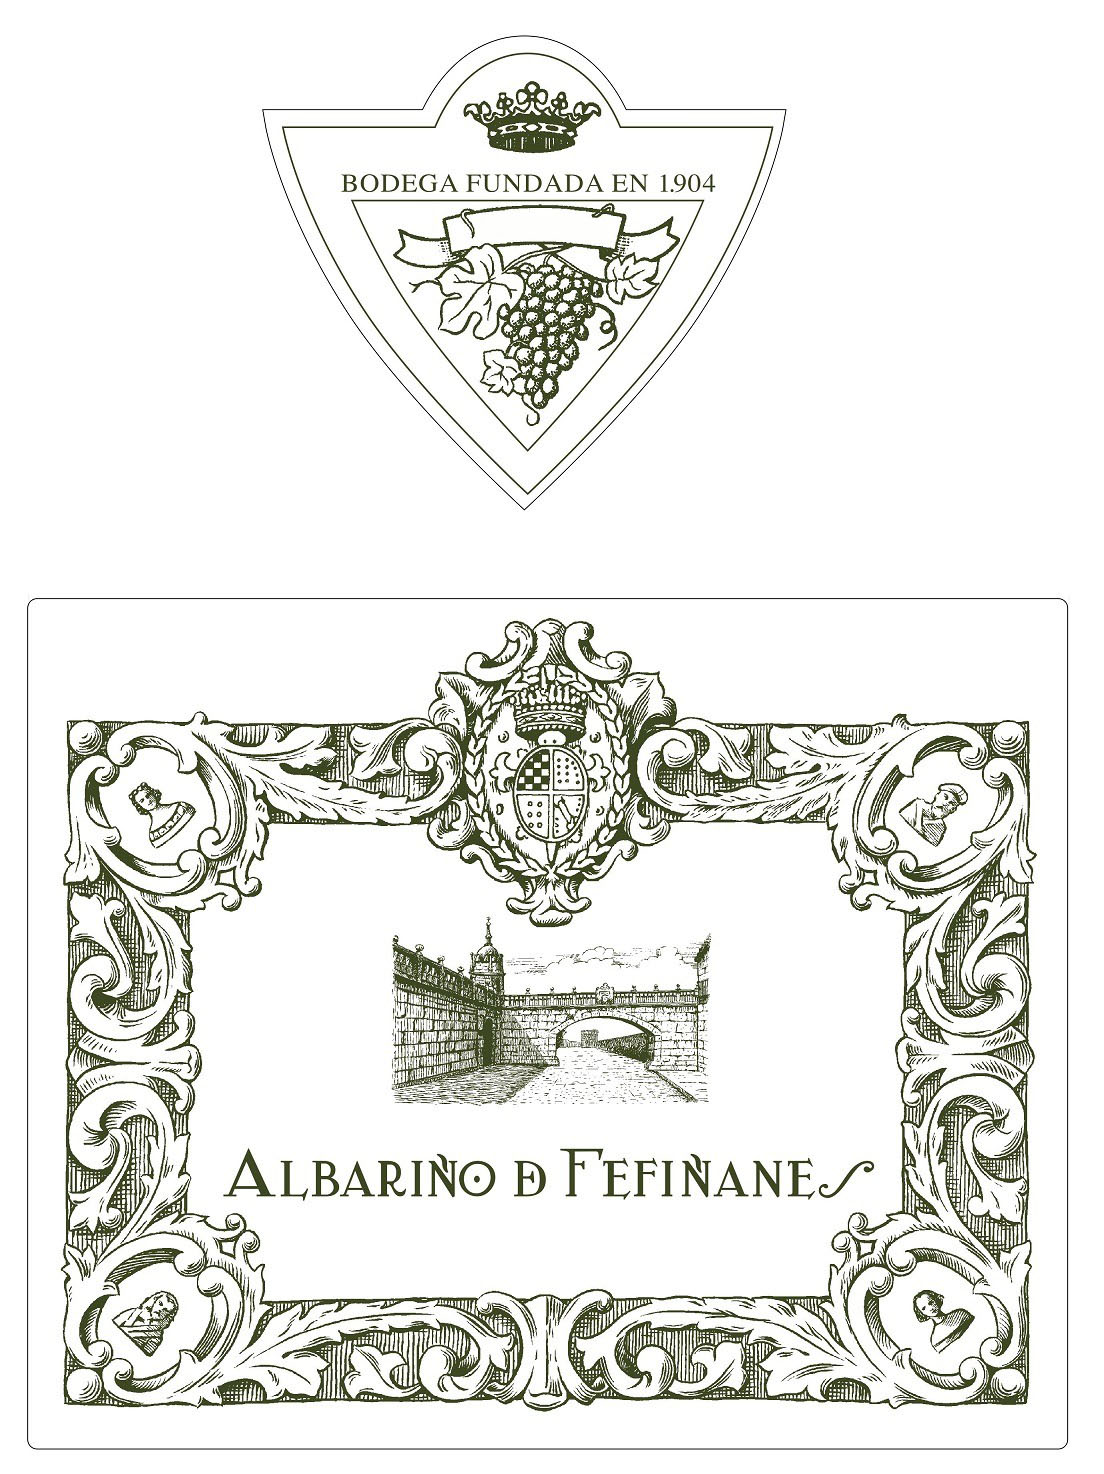 the United - States French Timeless Cabernet Fefinanes from - Albarino Albarino Wines California - Online | Wines Wine - de Savignon - - - Spanish Chardonnay Order Wines 2022 Wines Port